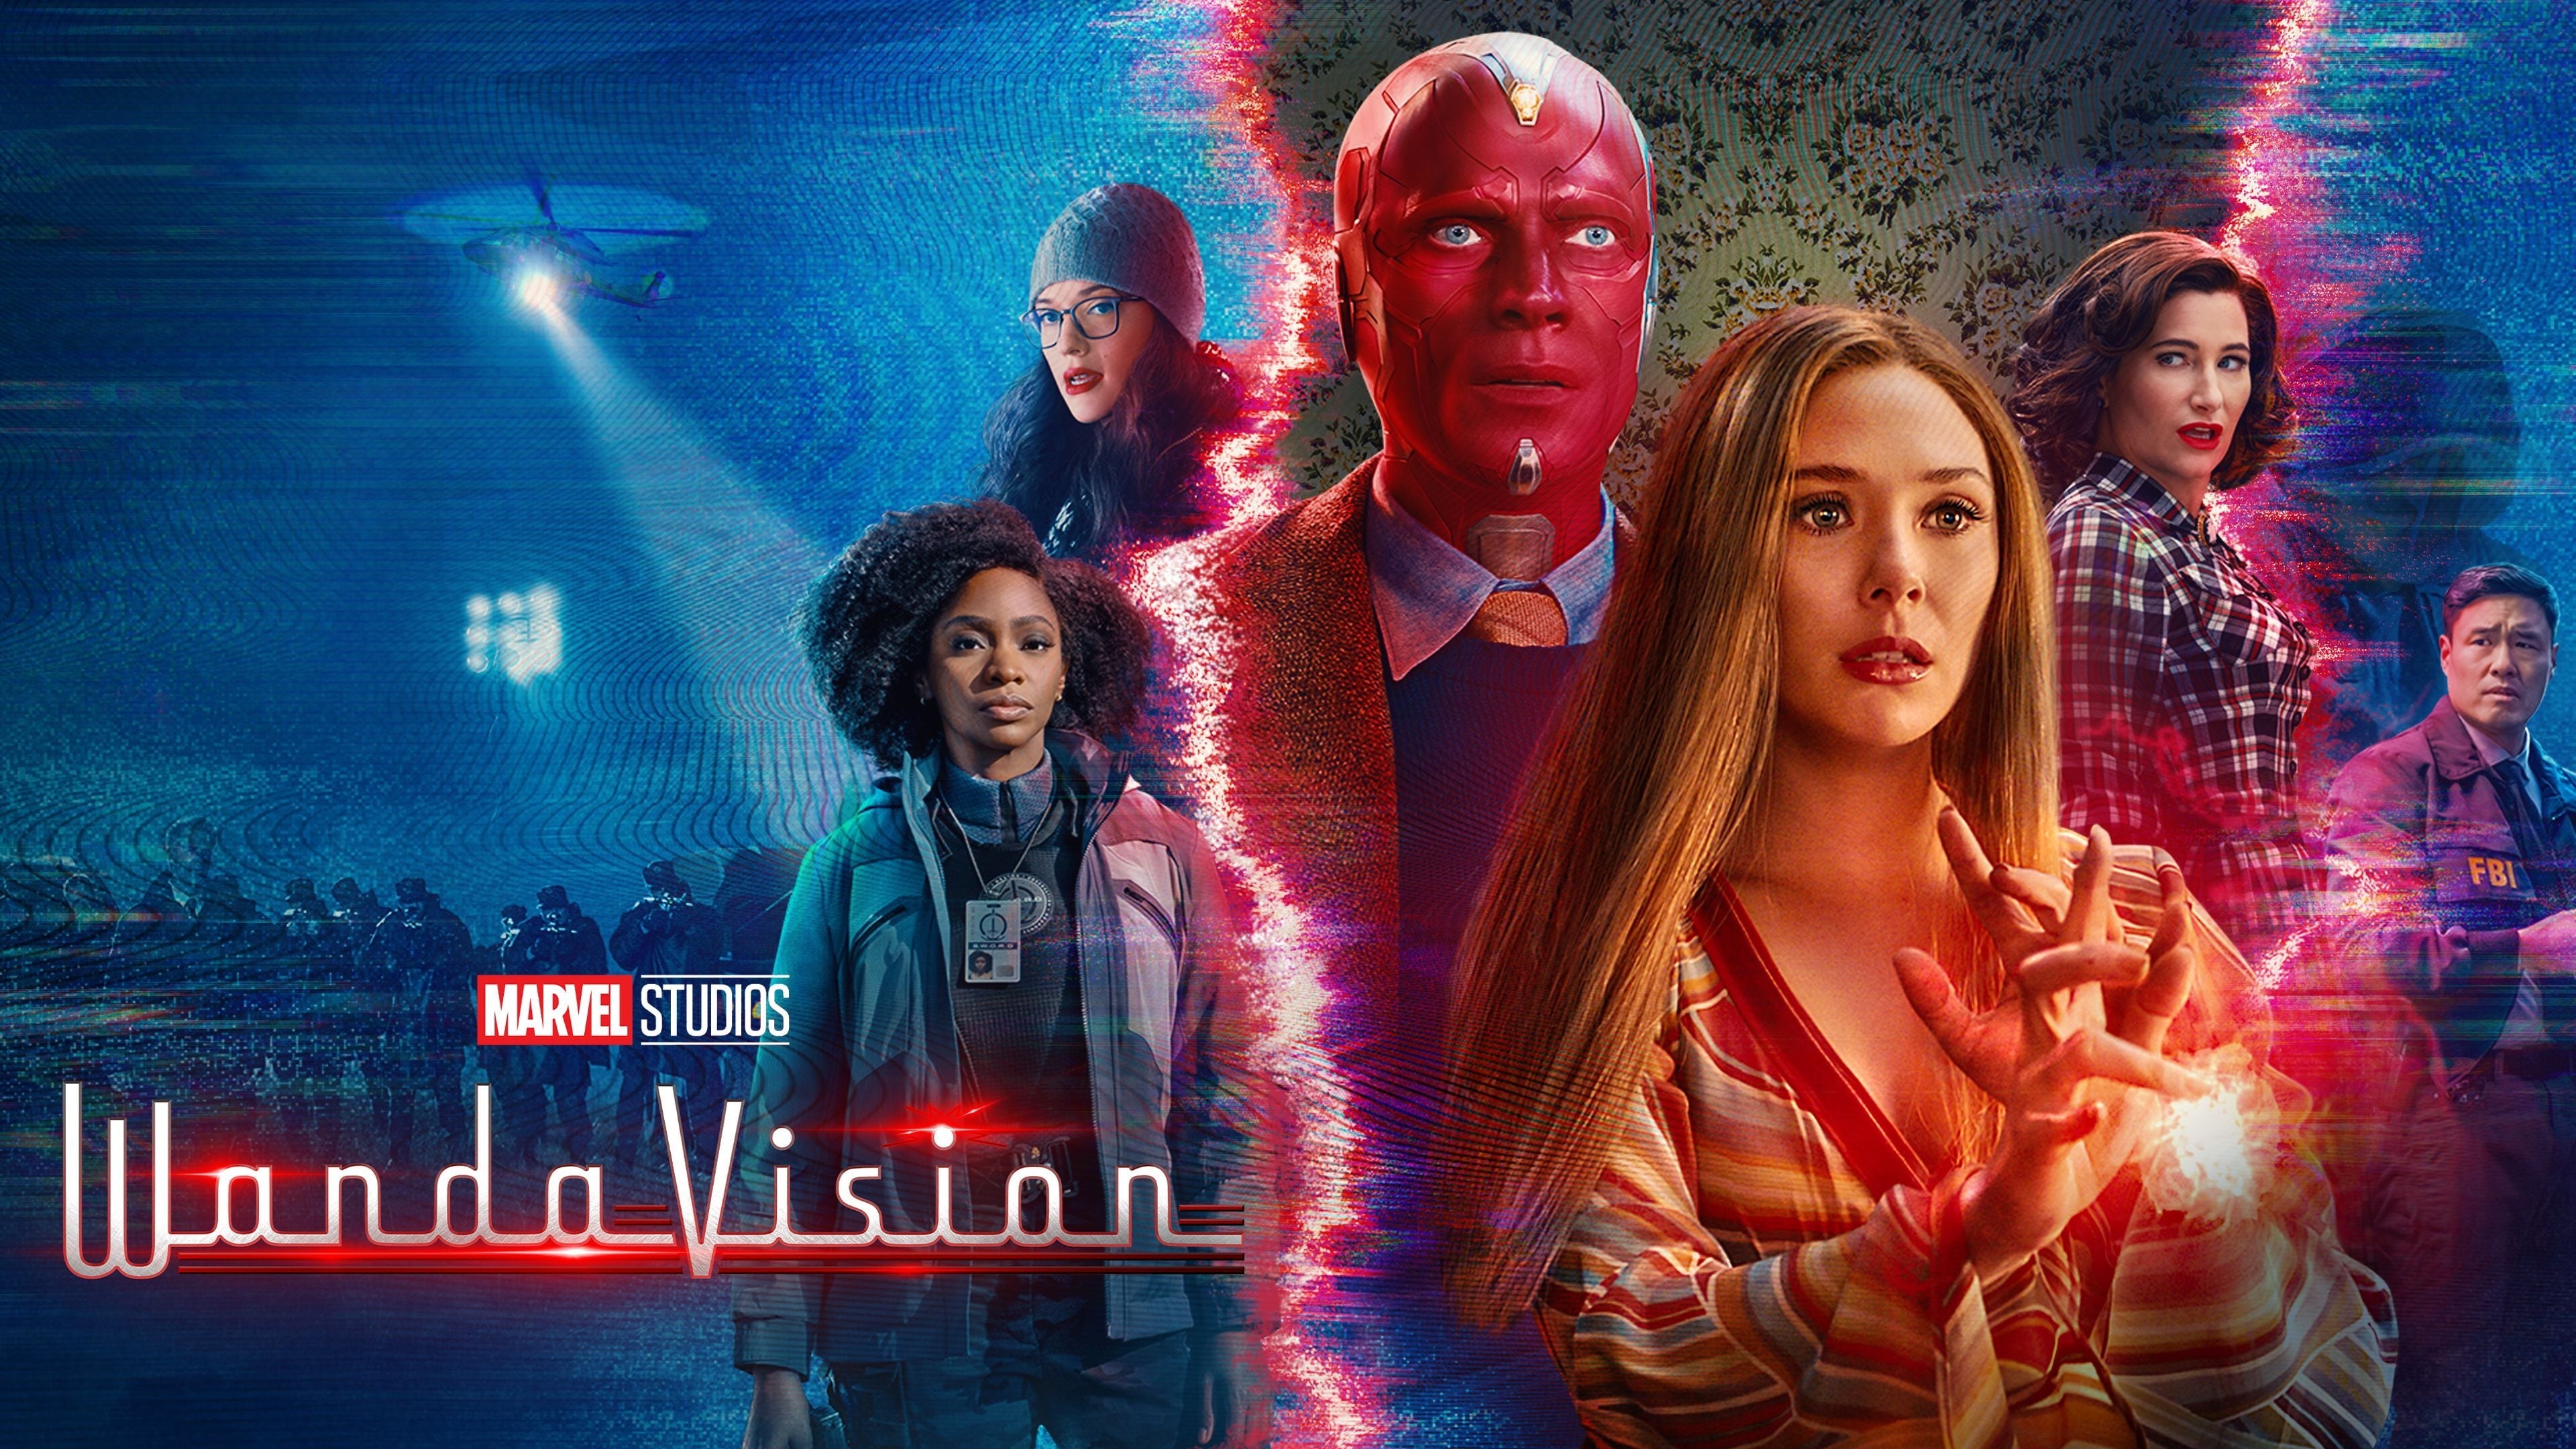 O futuro da Marvel após WandaVision. Veja as possibilidades!